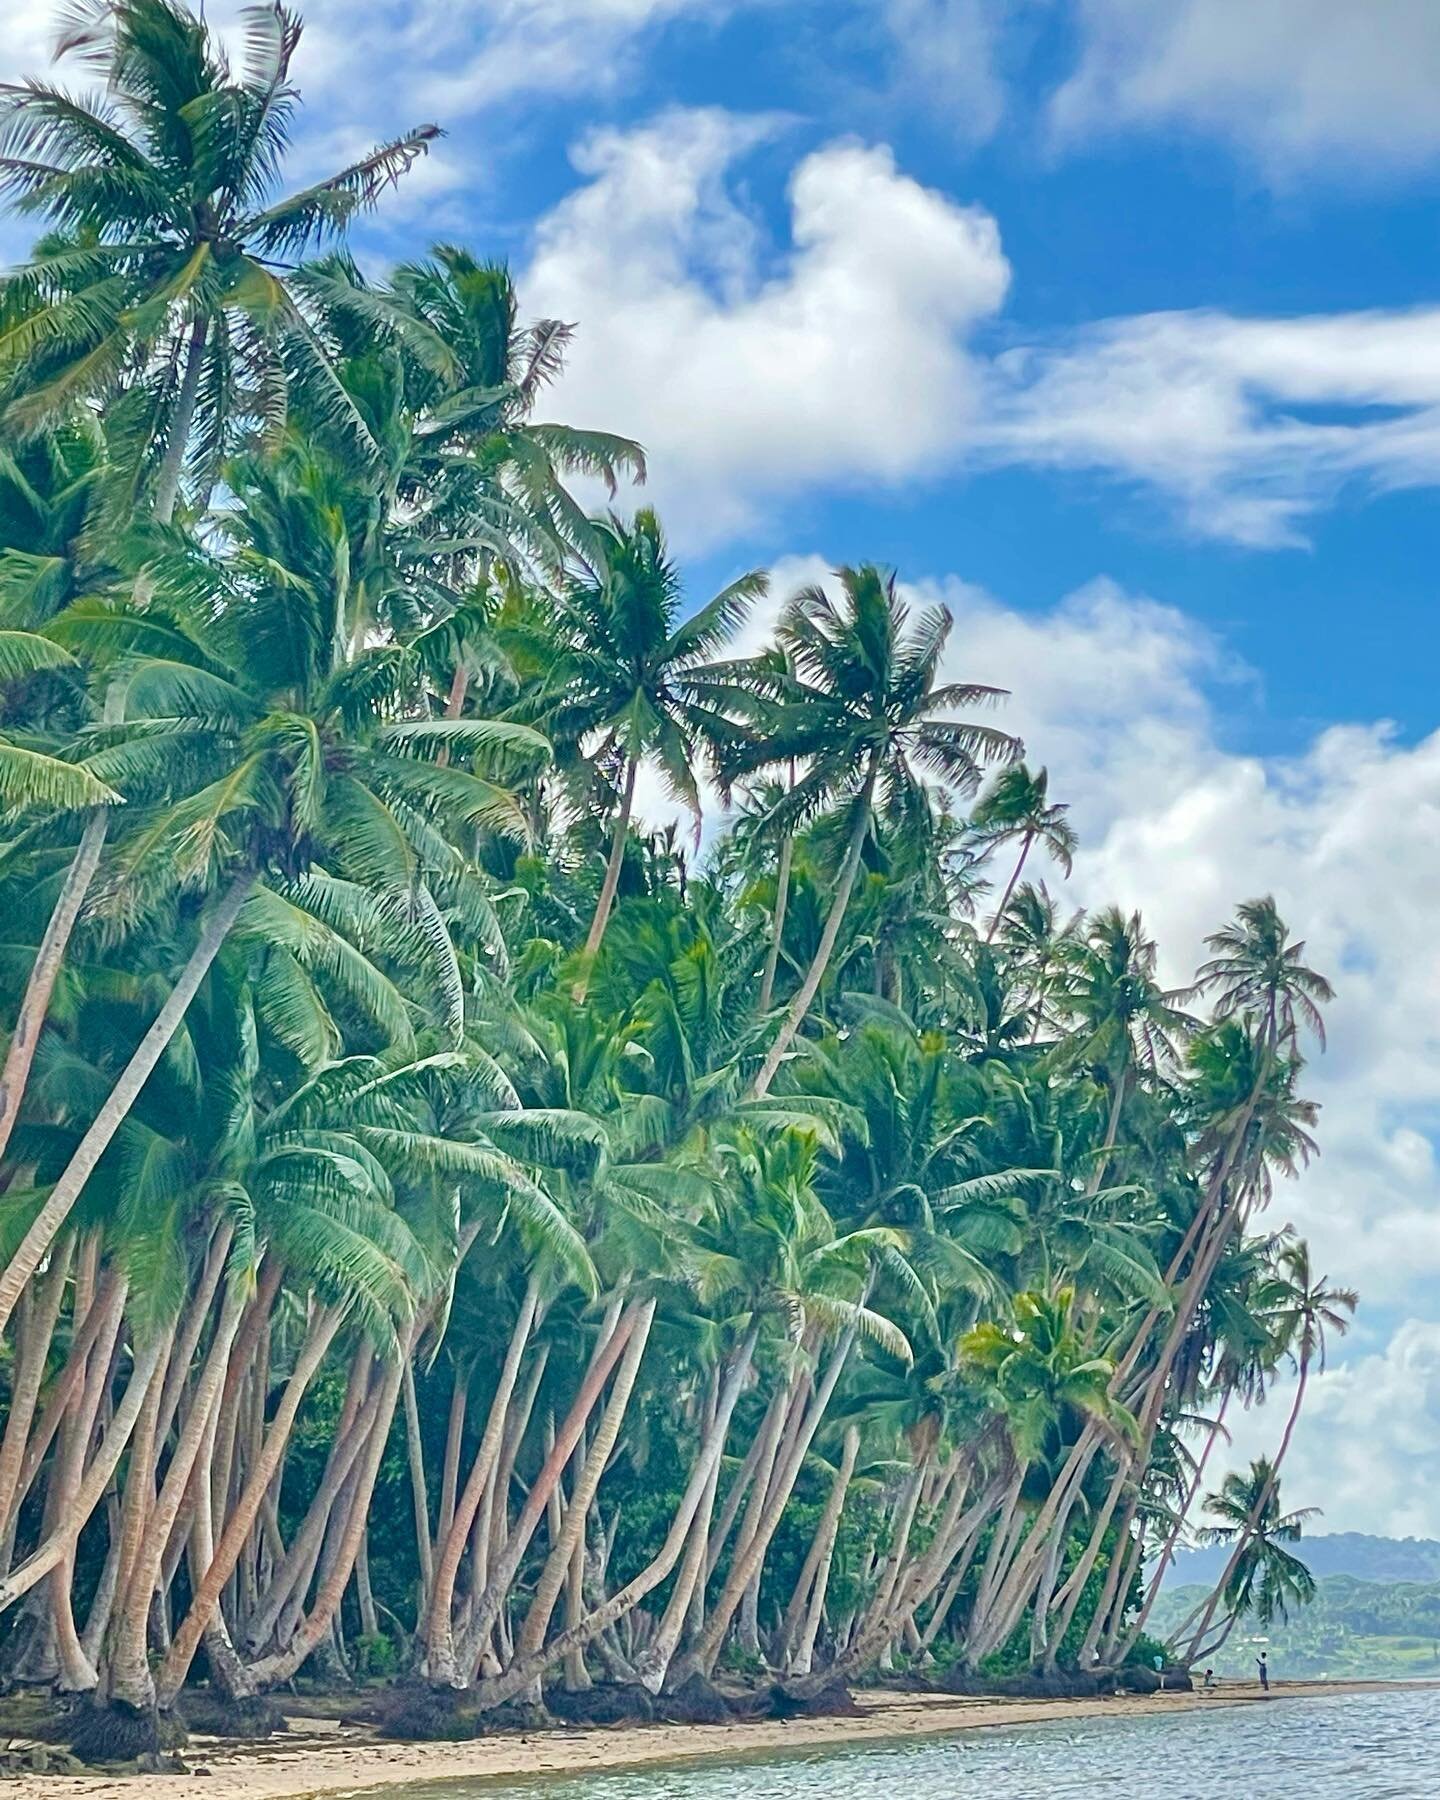 My Beach. This grove of palm trees never ceases to amaze me. 

#fiji #fijiislands🌴 #savusavu #vanaulevuisland #southpacific